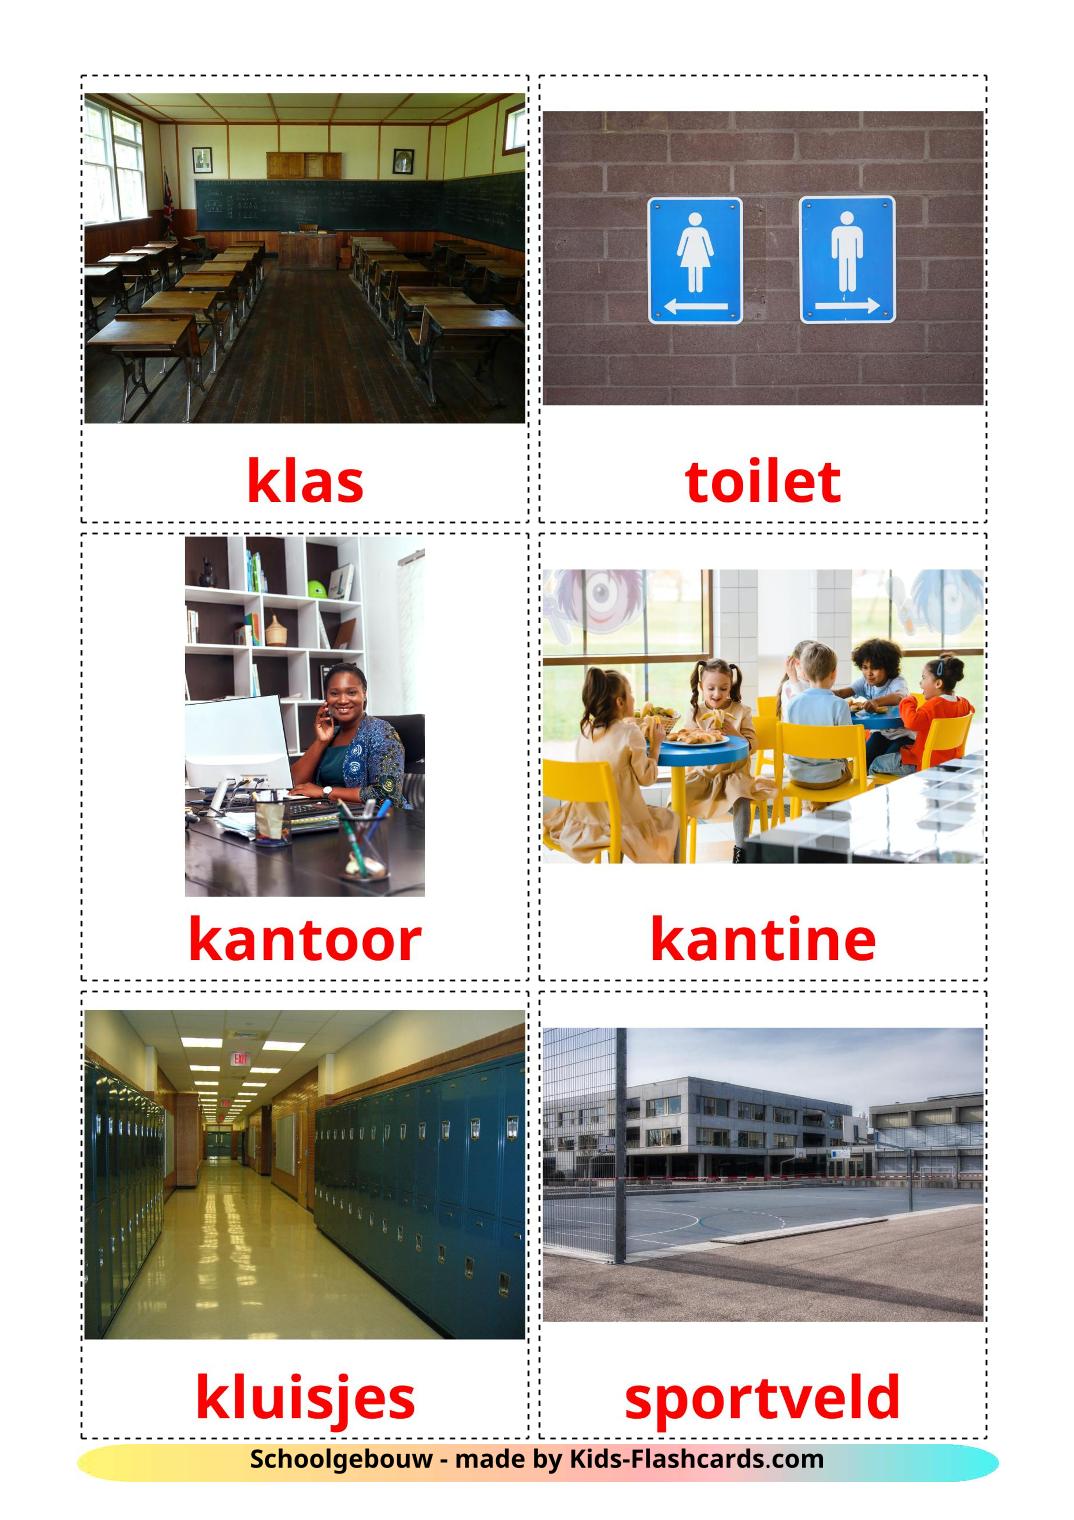 Edificio escolar - 17 fichas de holandés para imprimir gratis 